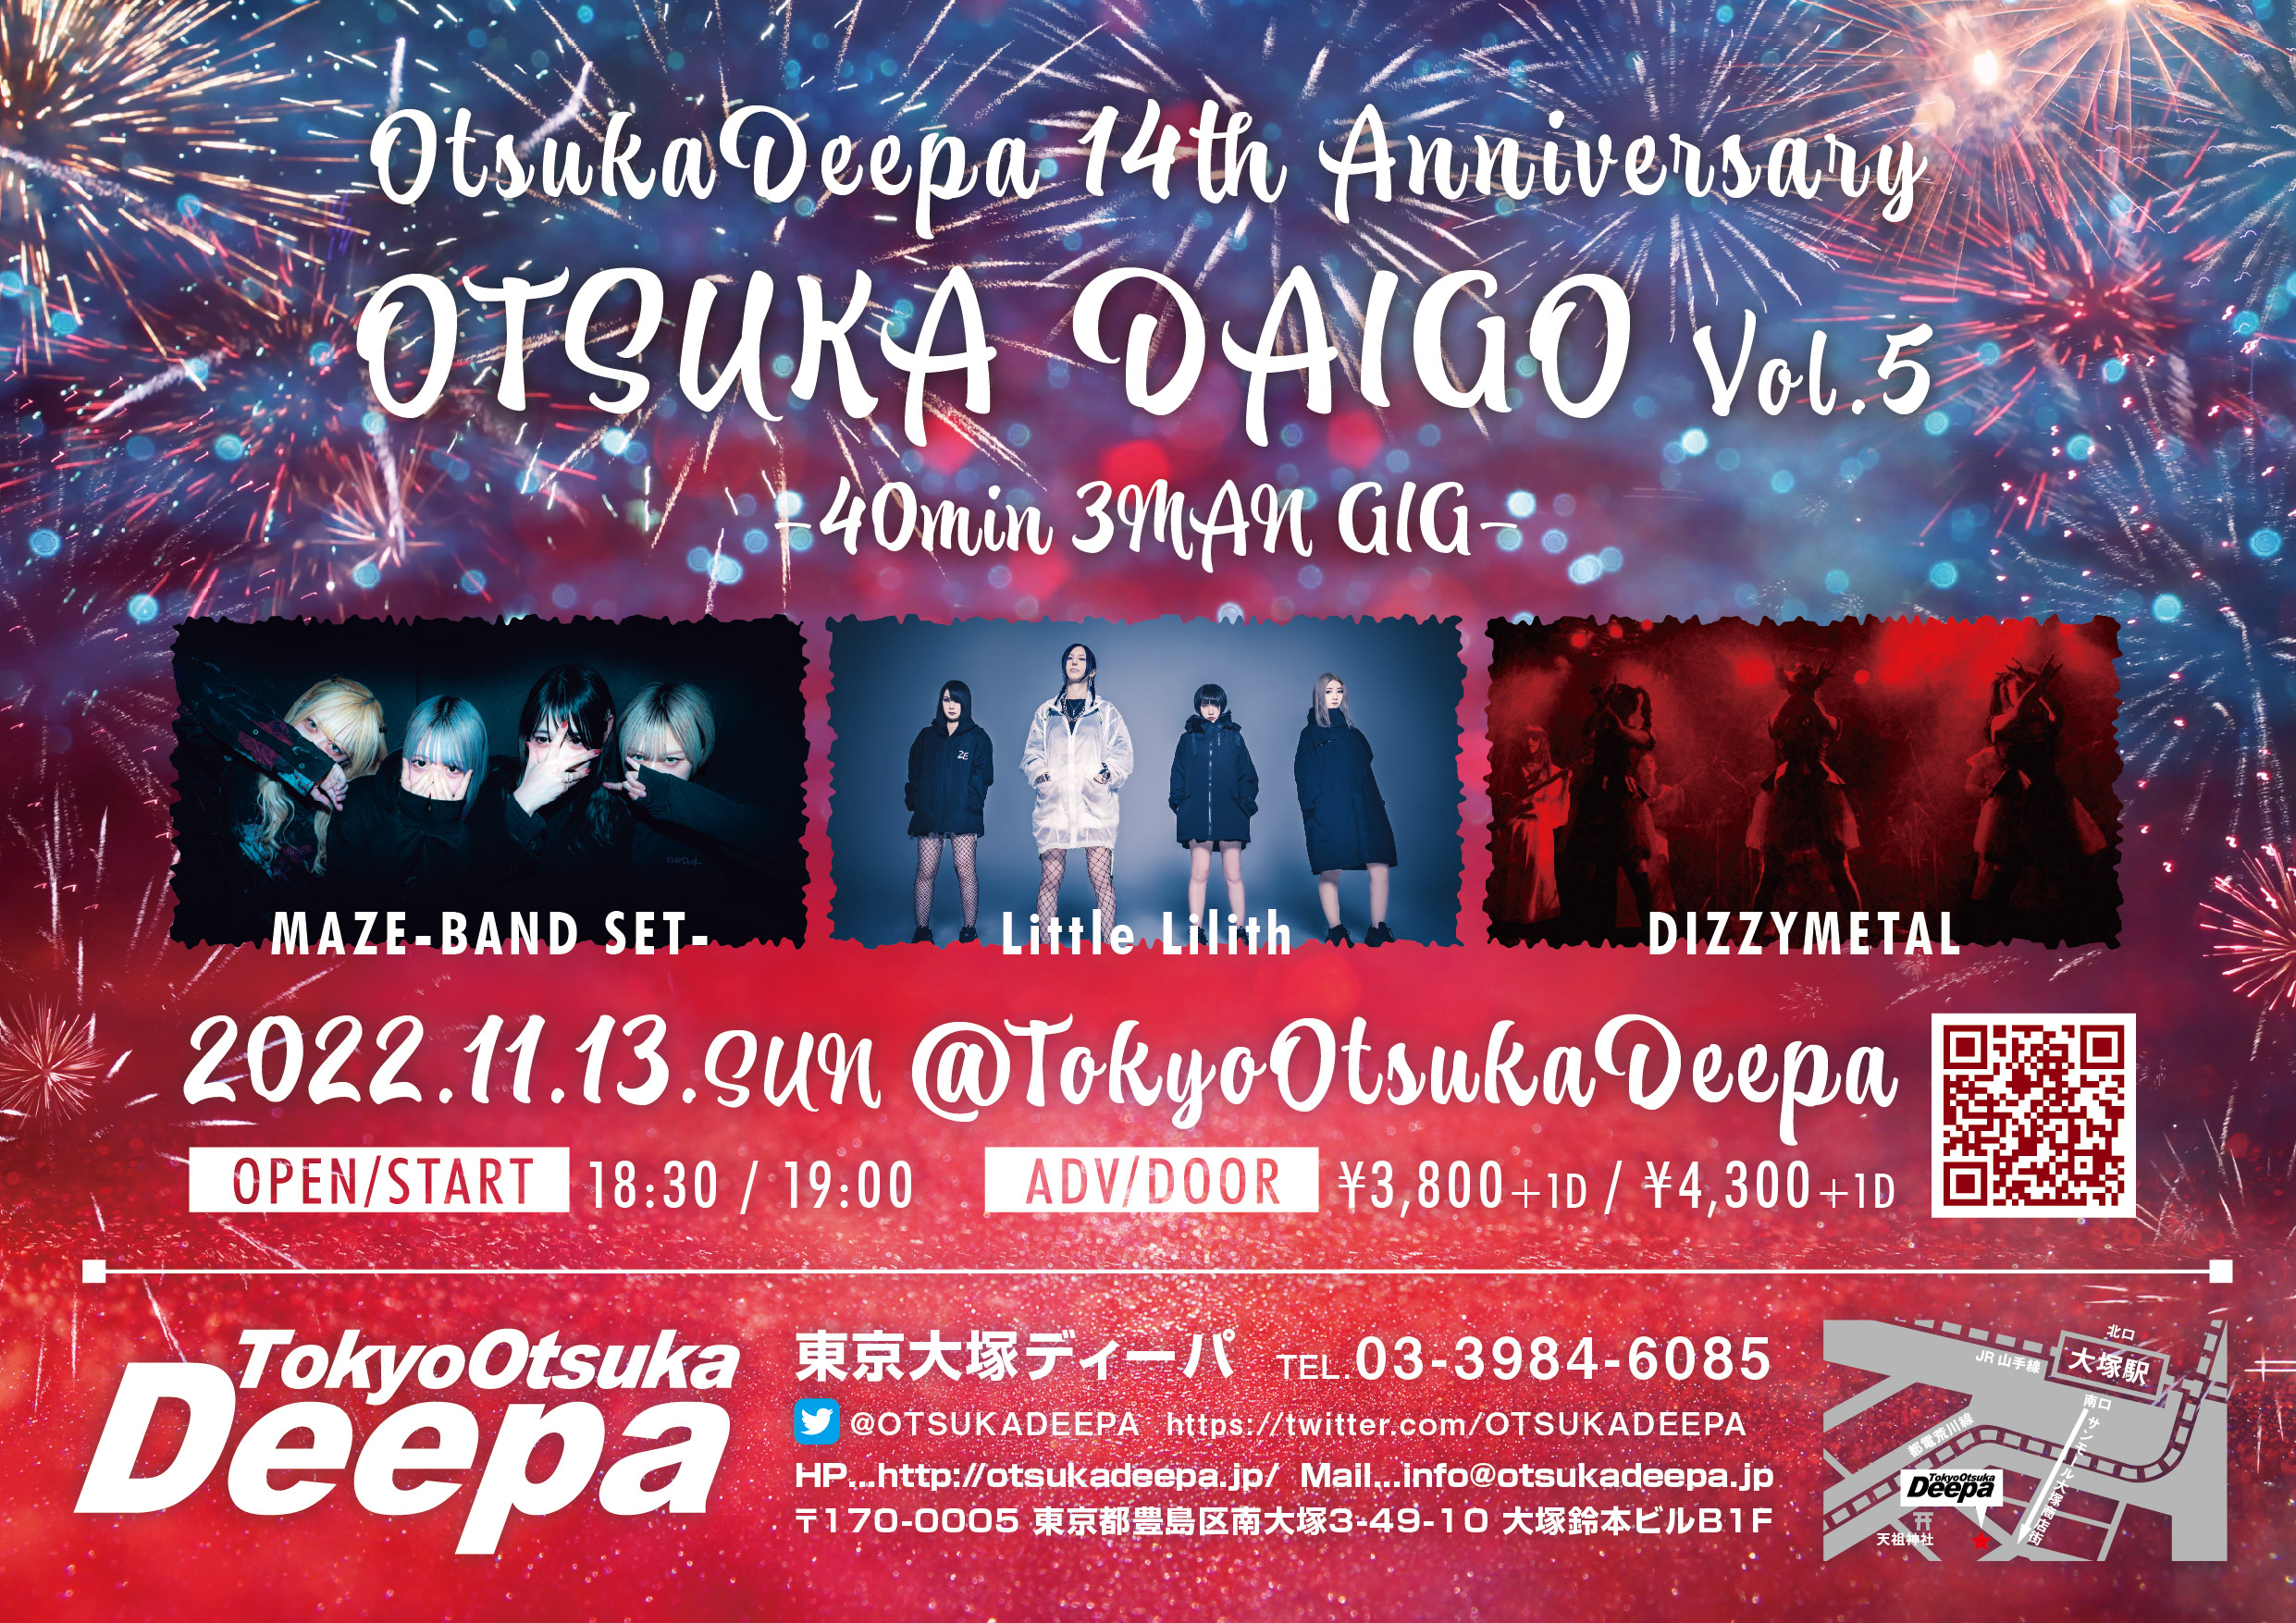 OtsukaDeepa 14th Anniversary「OTSUKA DAIGO Vol.5」